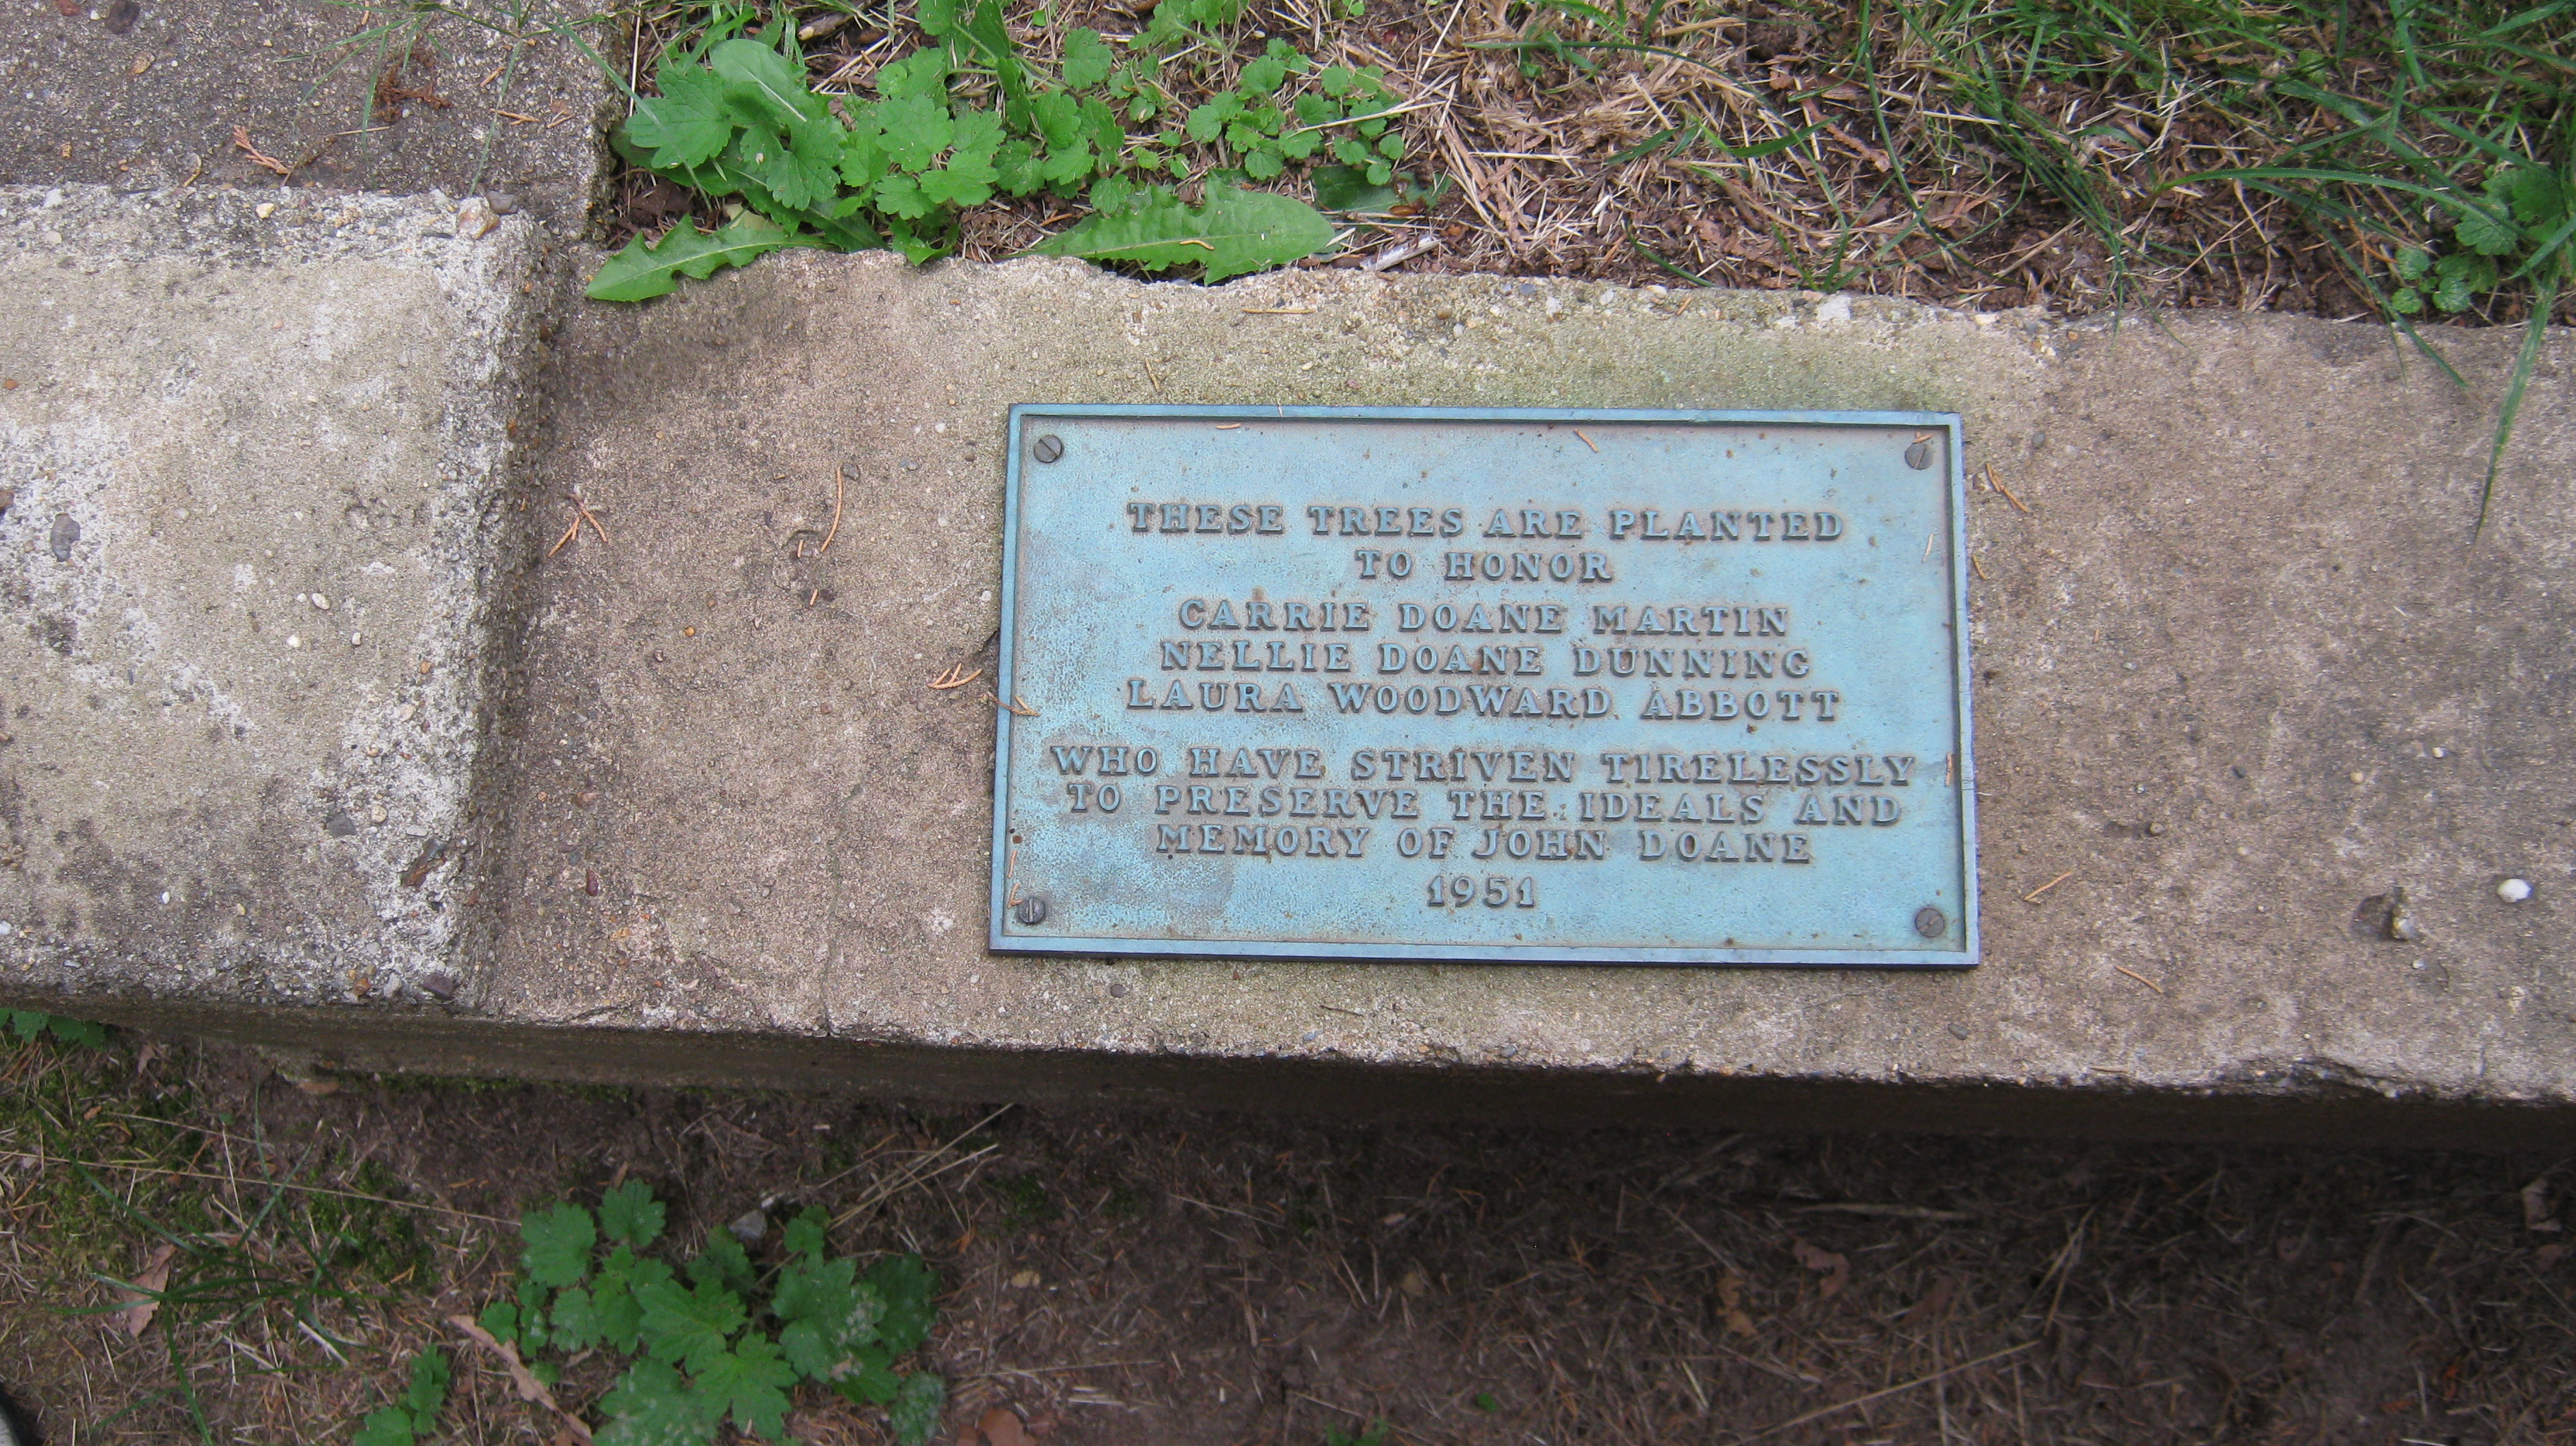 Commemorative plaque at Deacon John homesite 